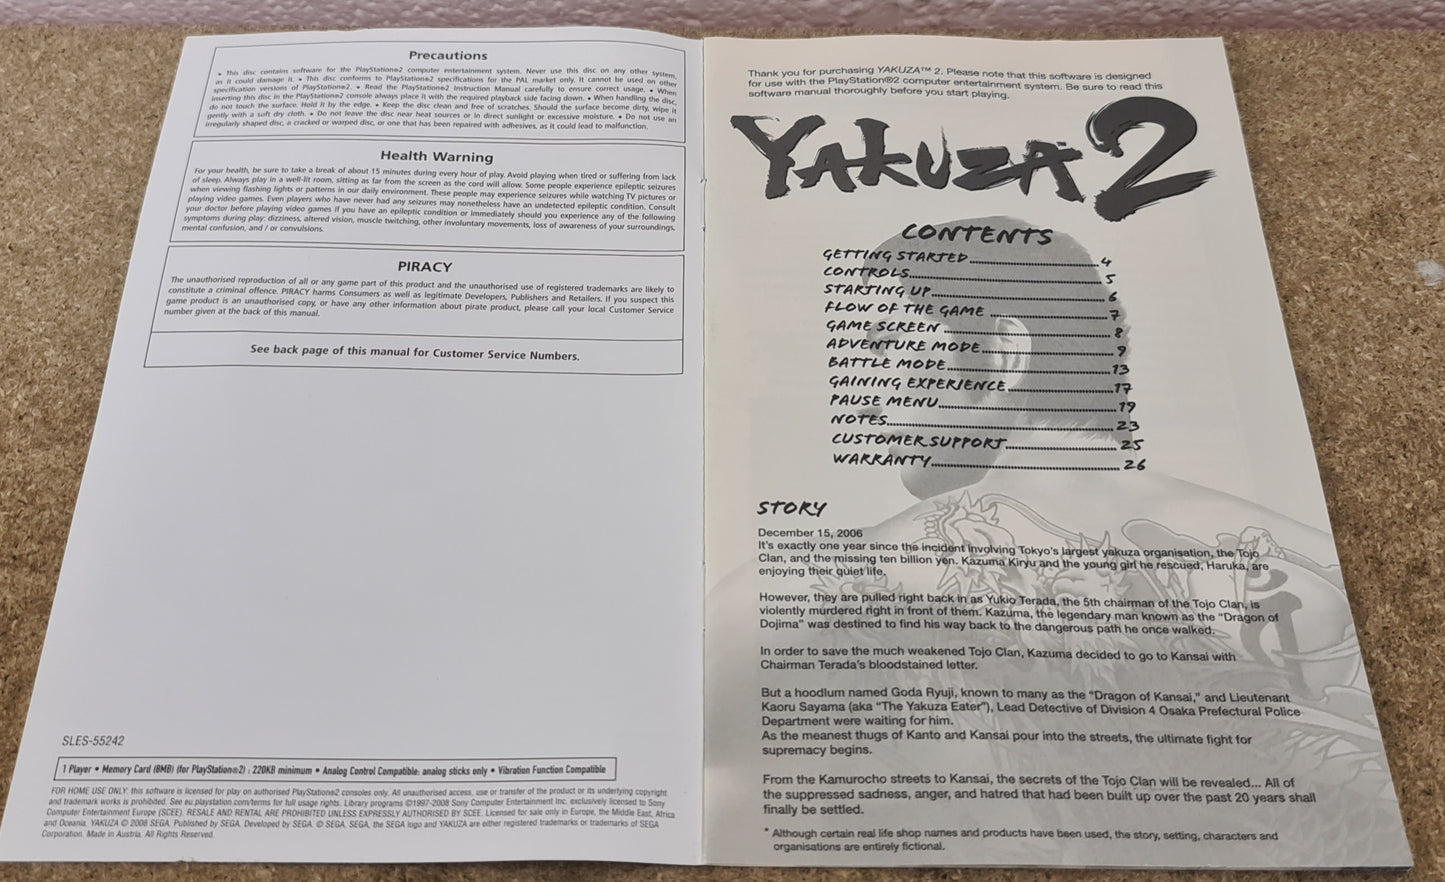 Yakuza 2 Sony Playstation 2 (PS2) Game